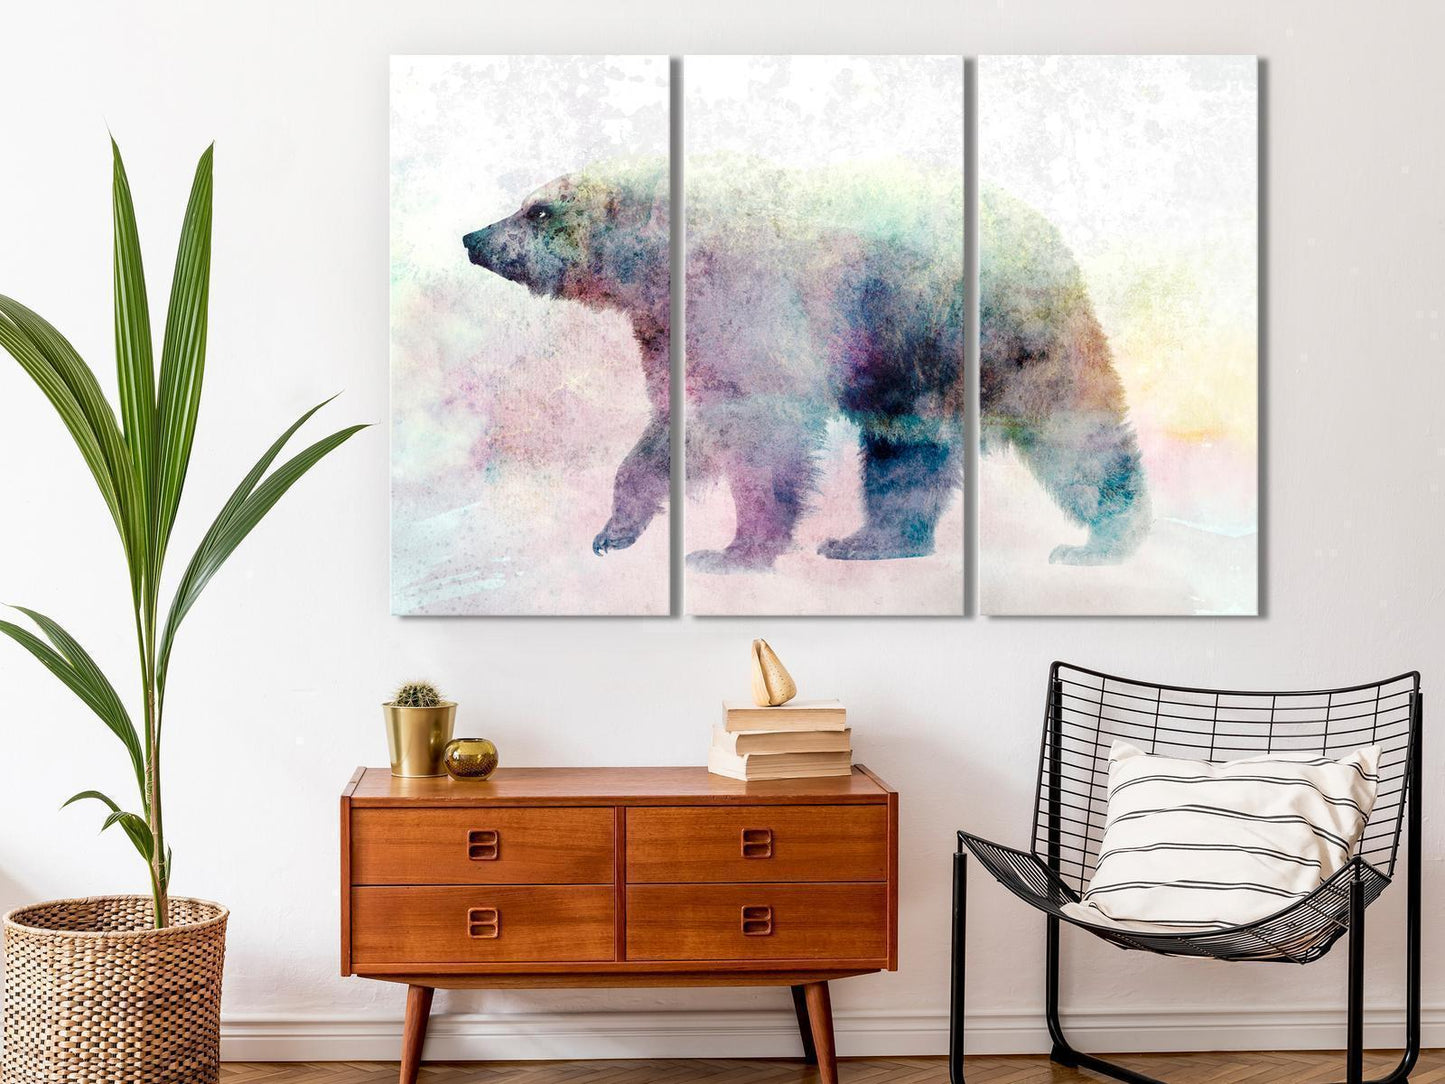 Gemälde - Einsamer Bär (3 Teile)